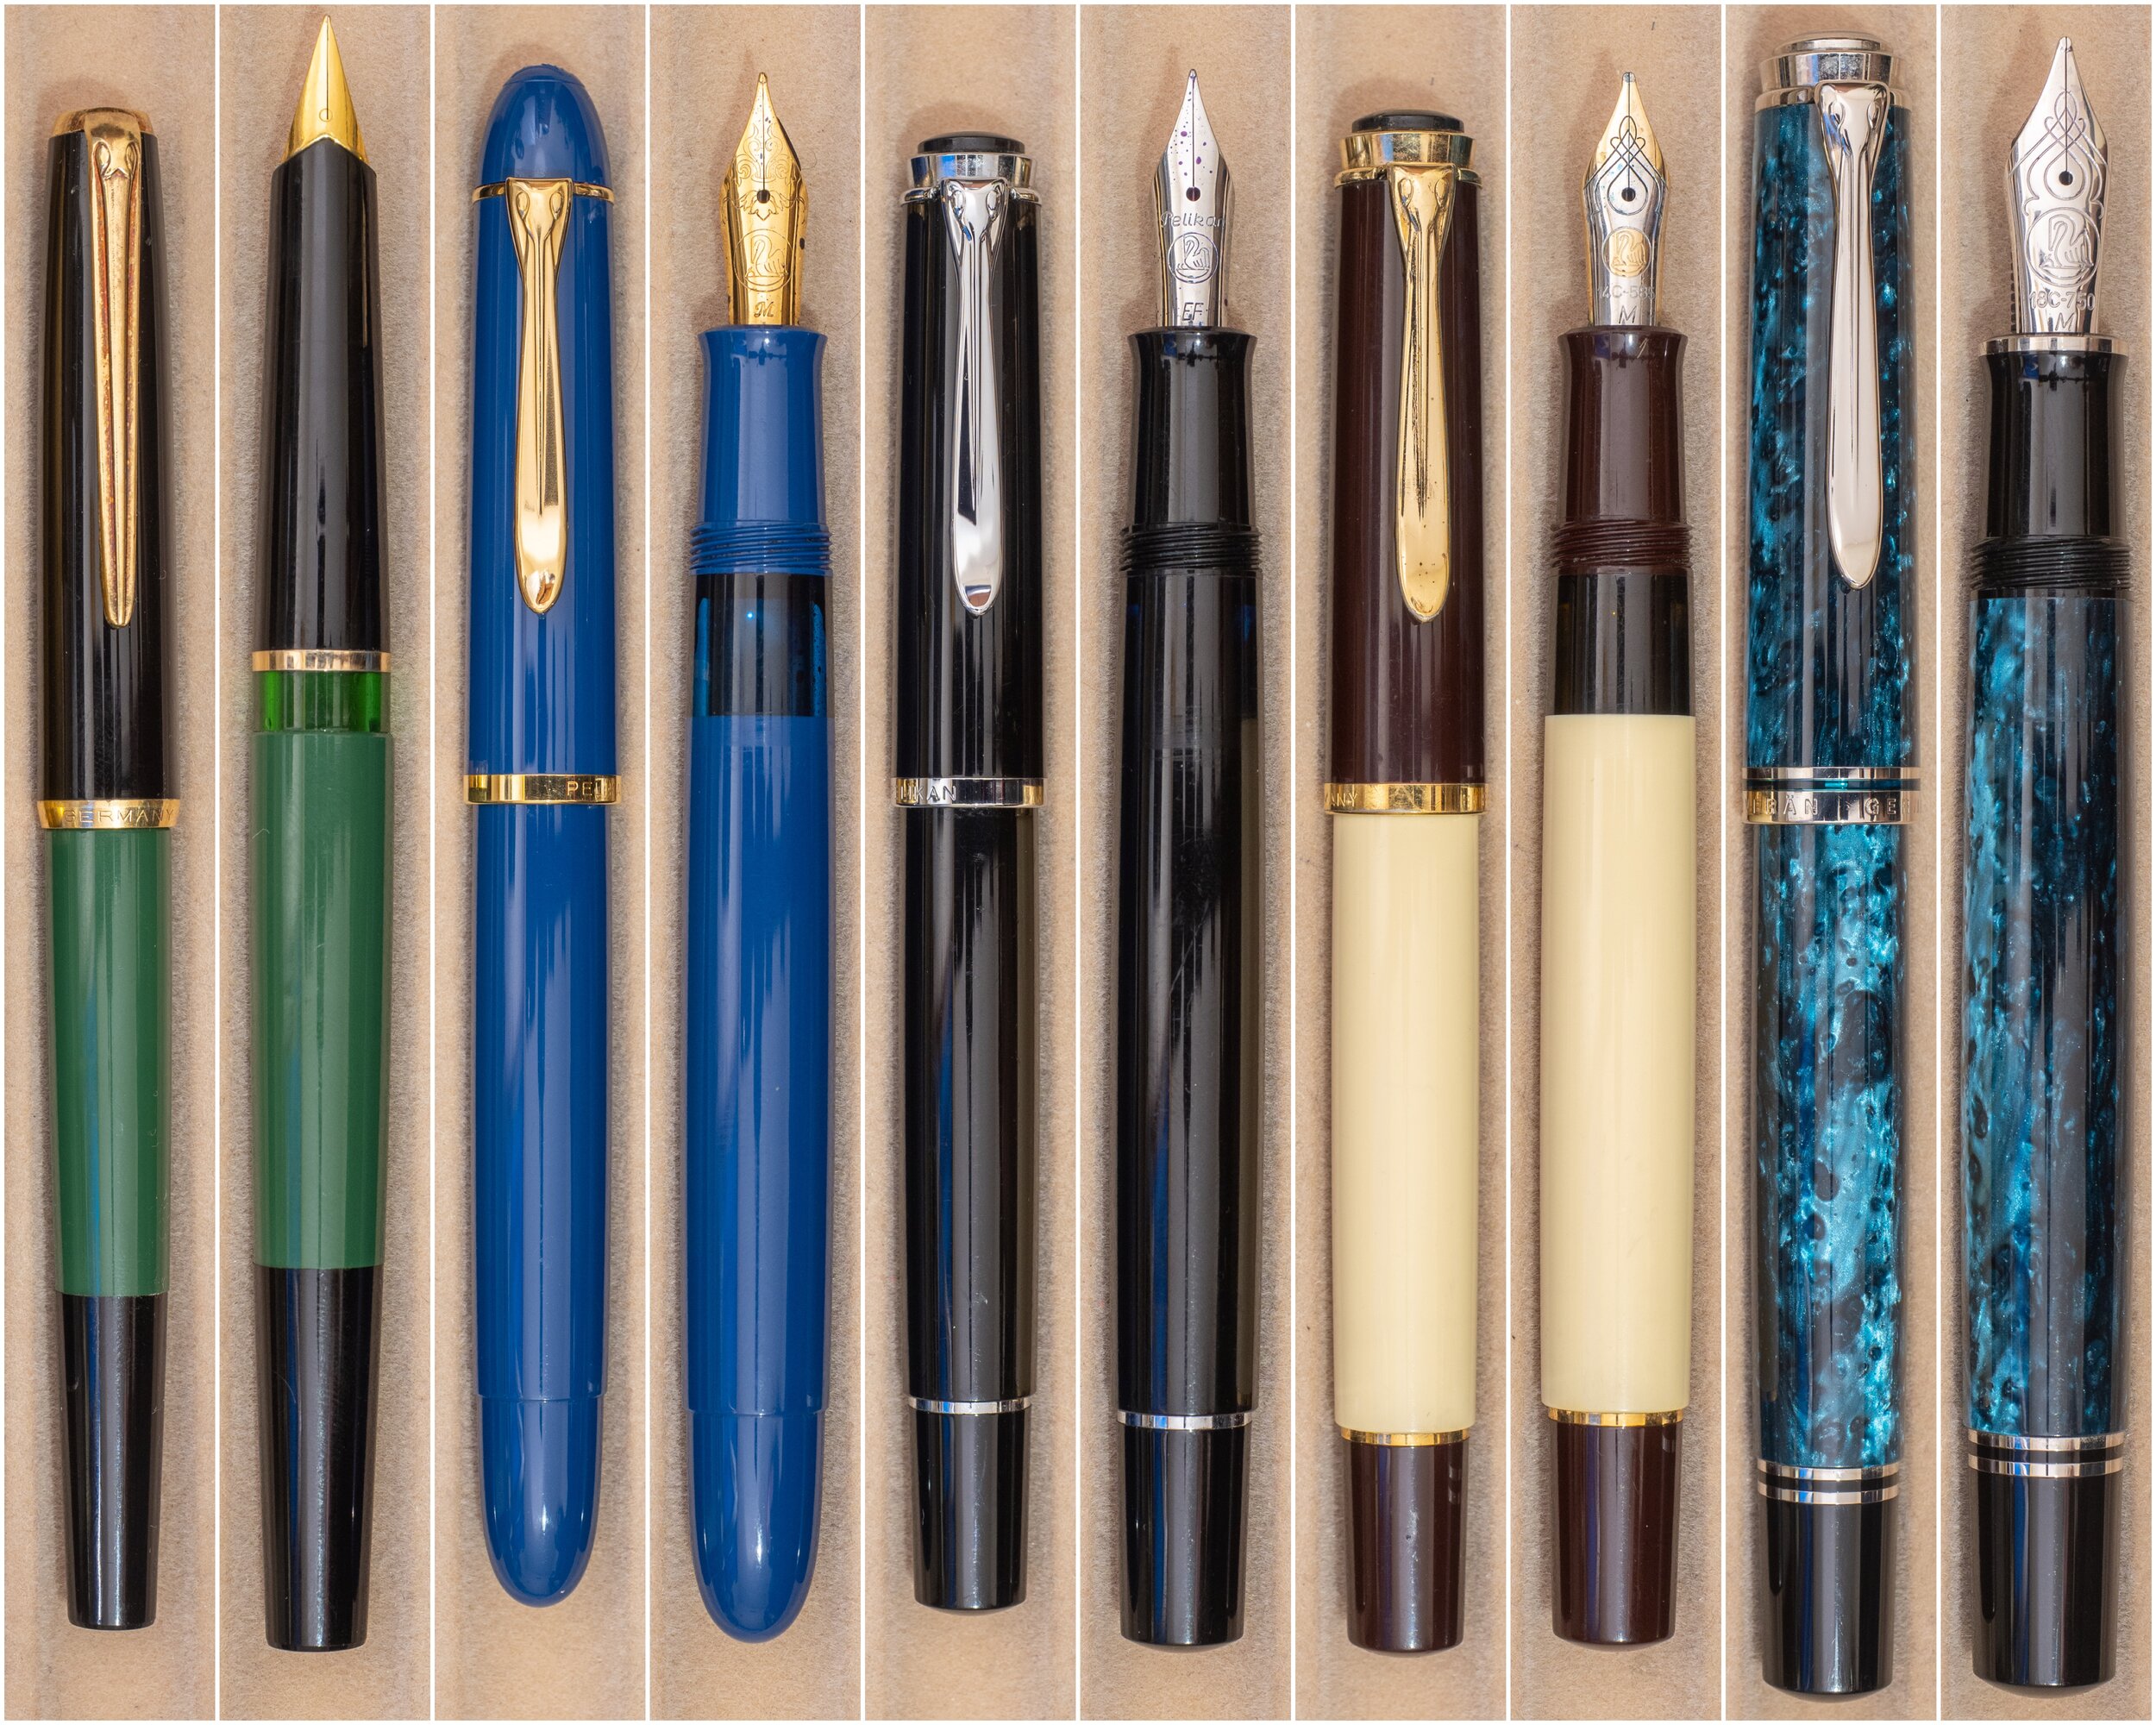 Gourmet Pens: Review: The CU13E Machined Pen Storage @ClickyPost  @KarasKustoms